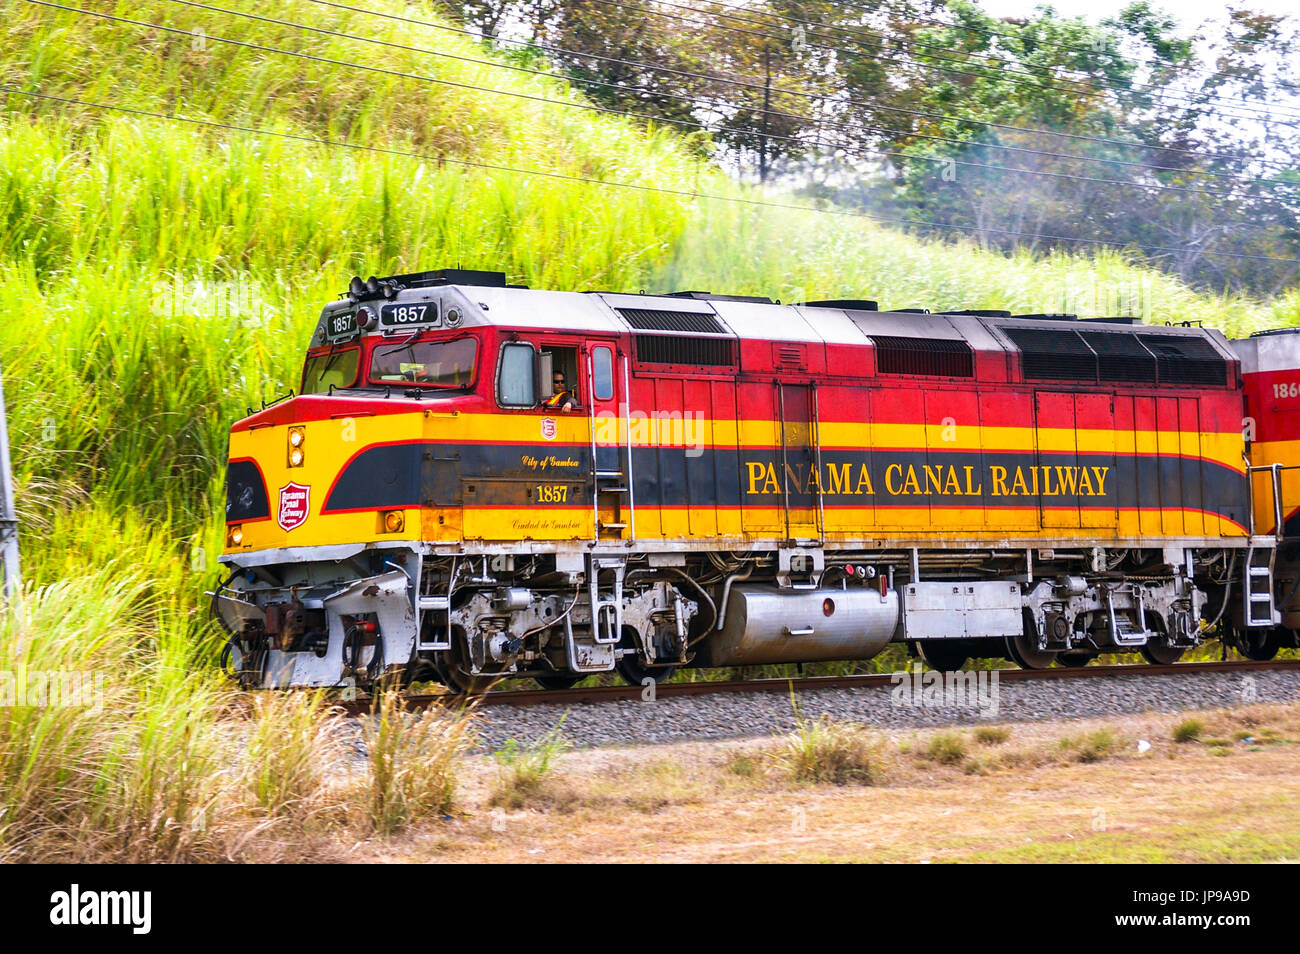 Panama Canal Railway locomitive Stockfoto